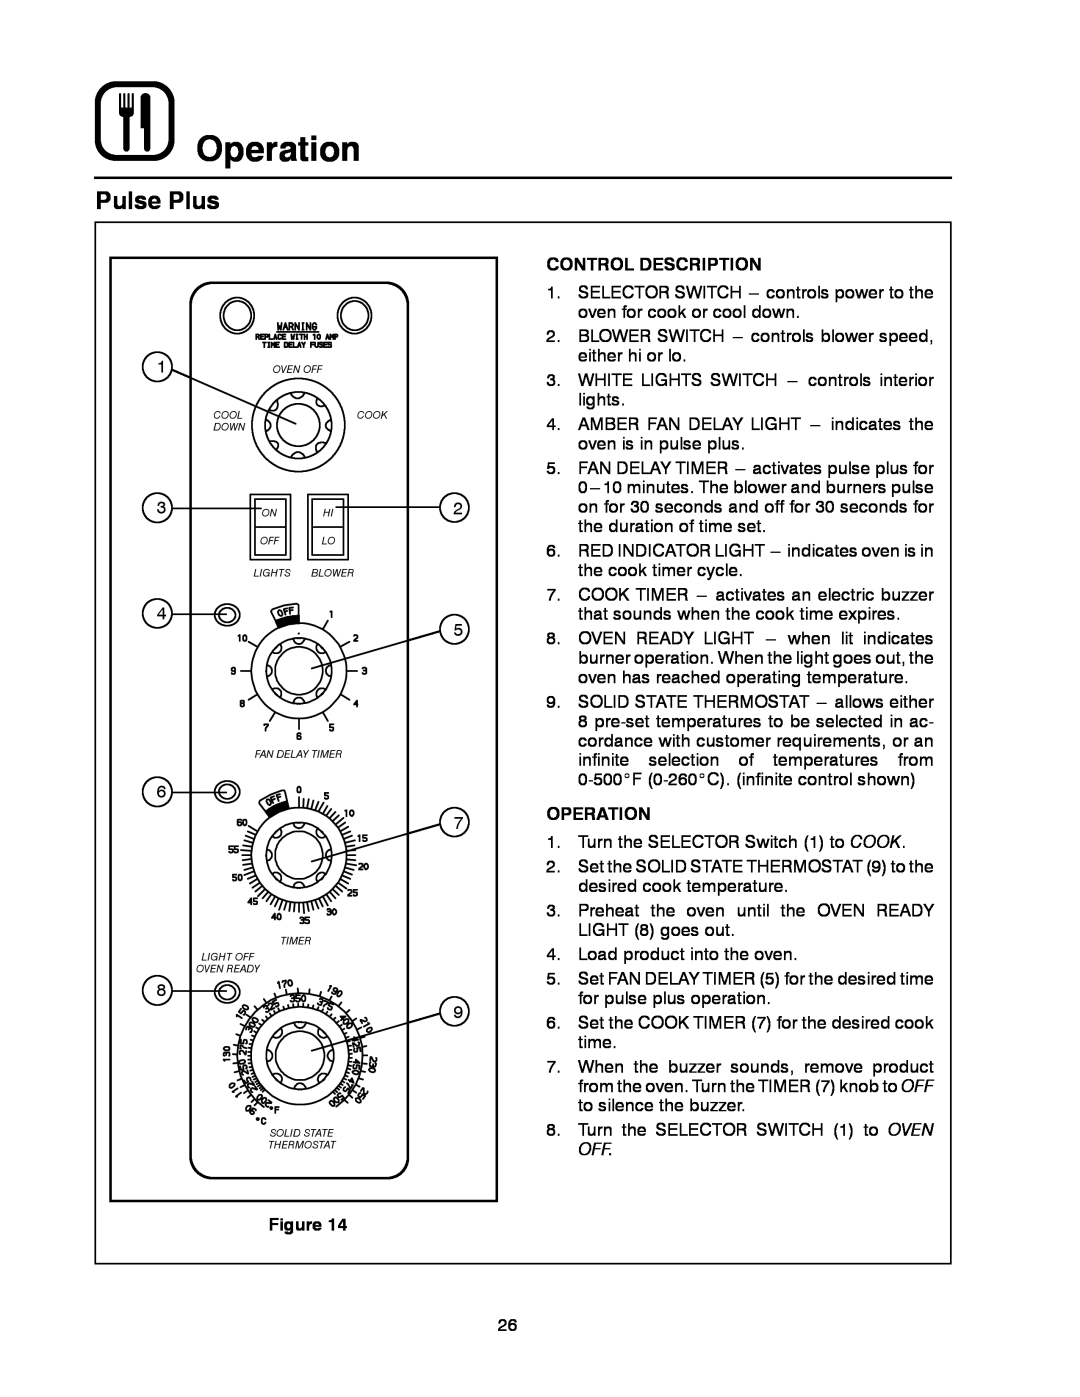 Blodgett MARK V manual Operation, Pulse Plus, Control Description 